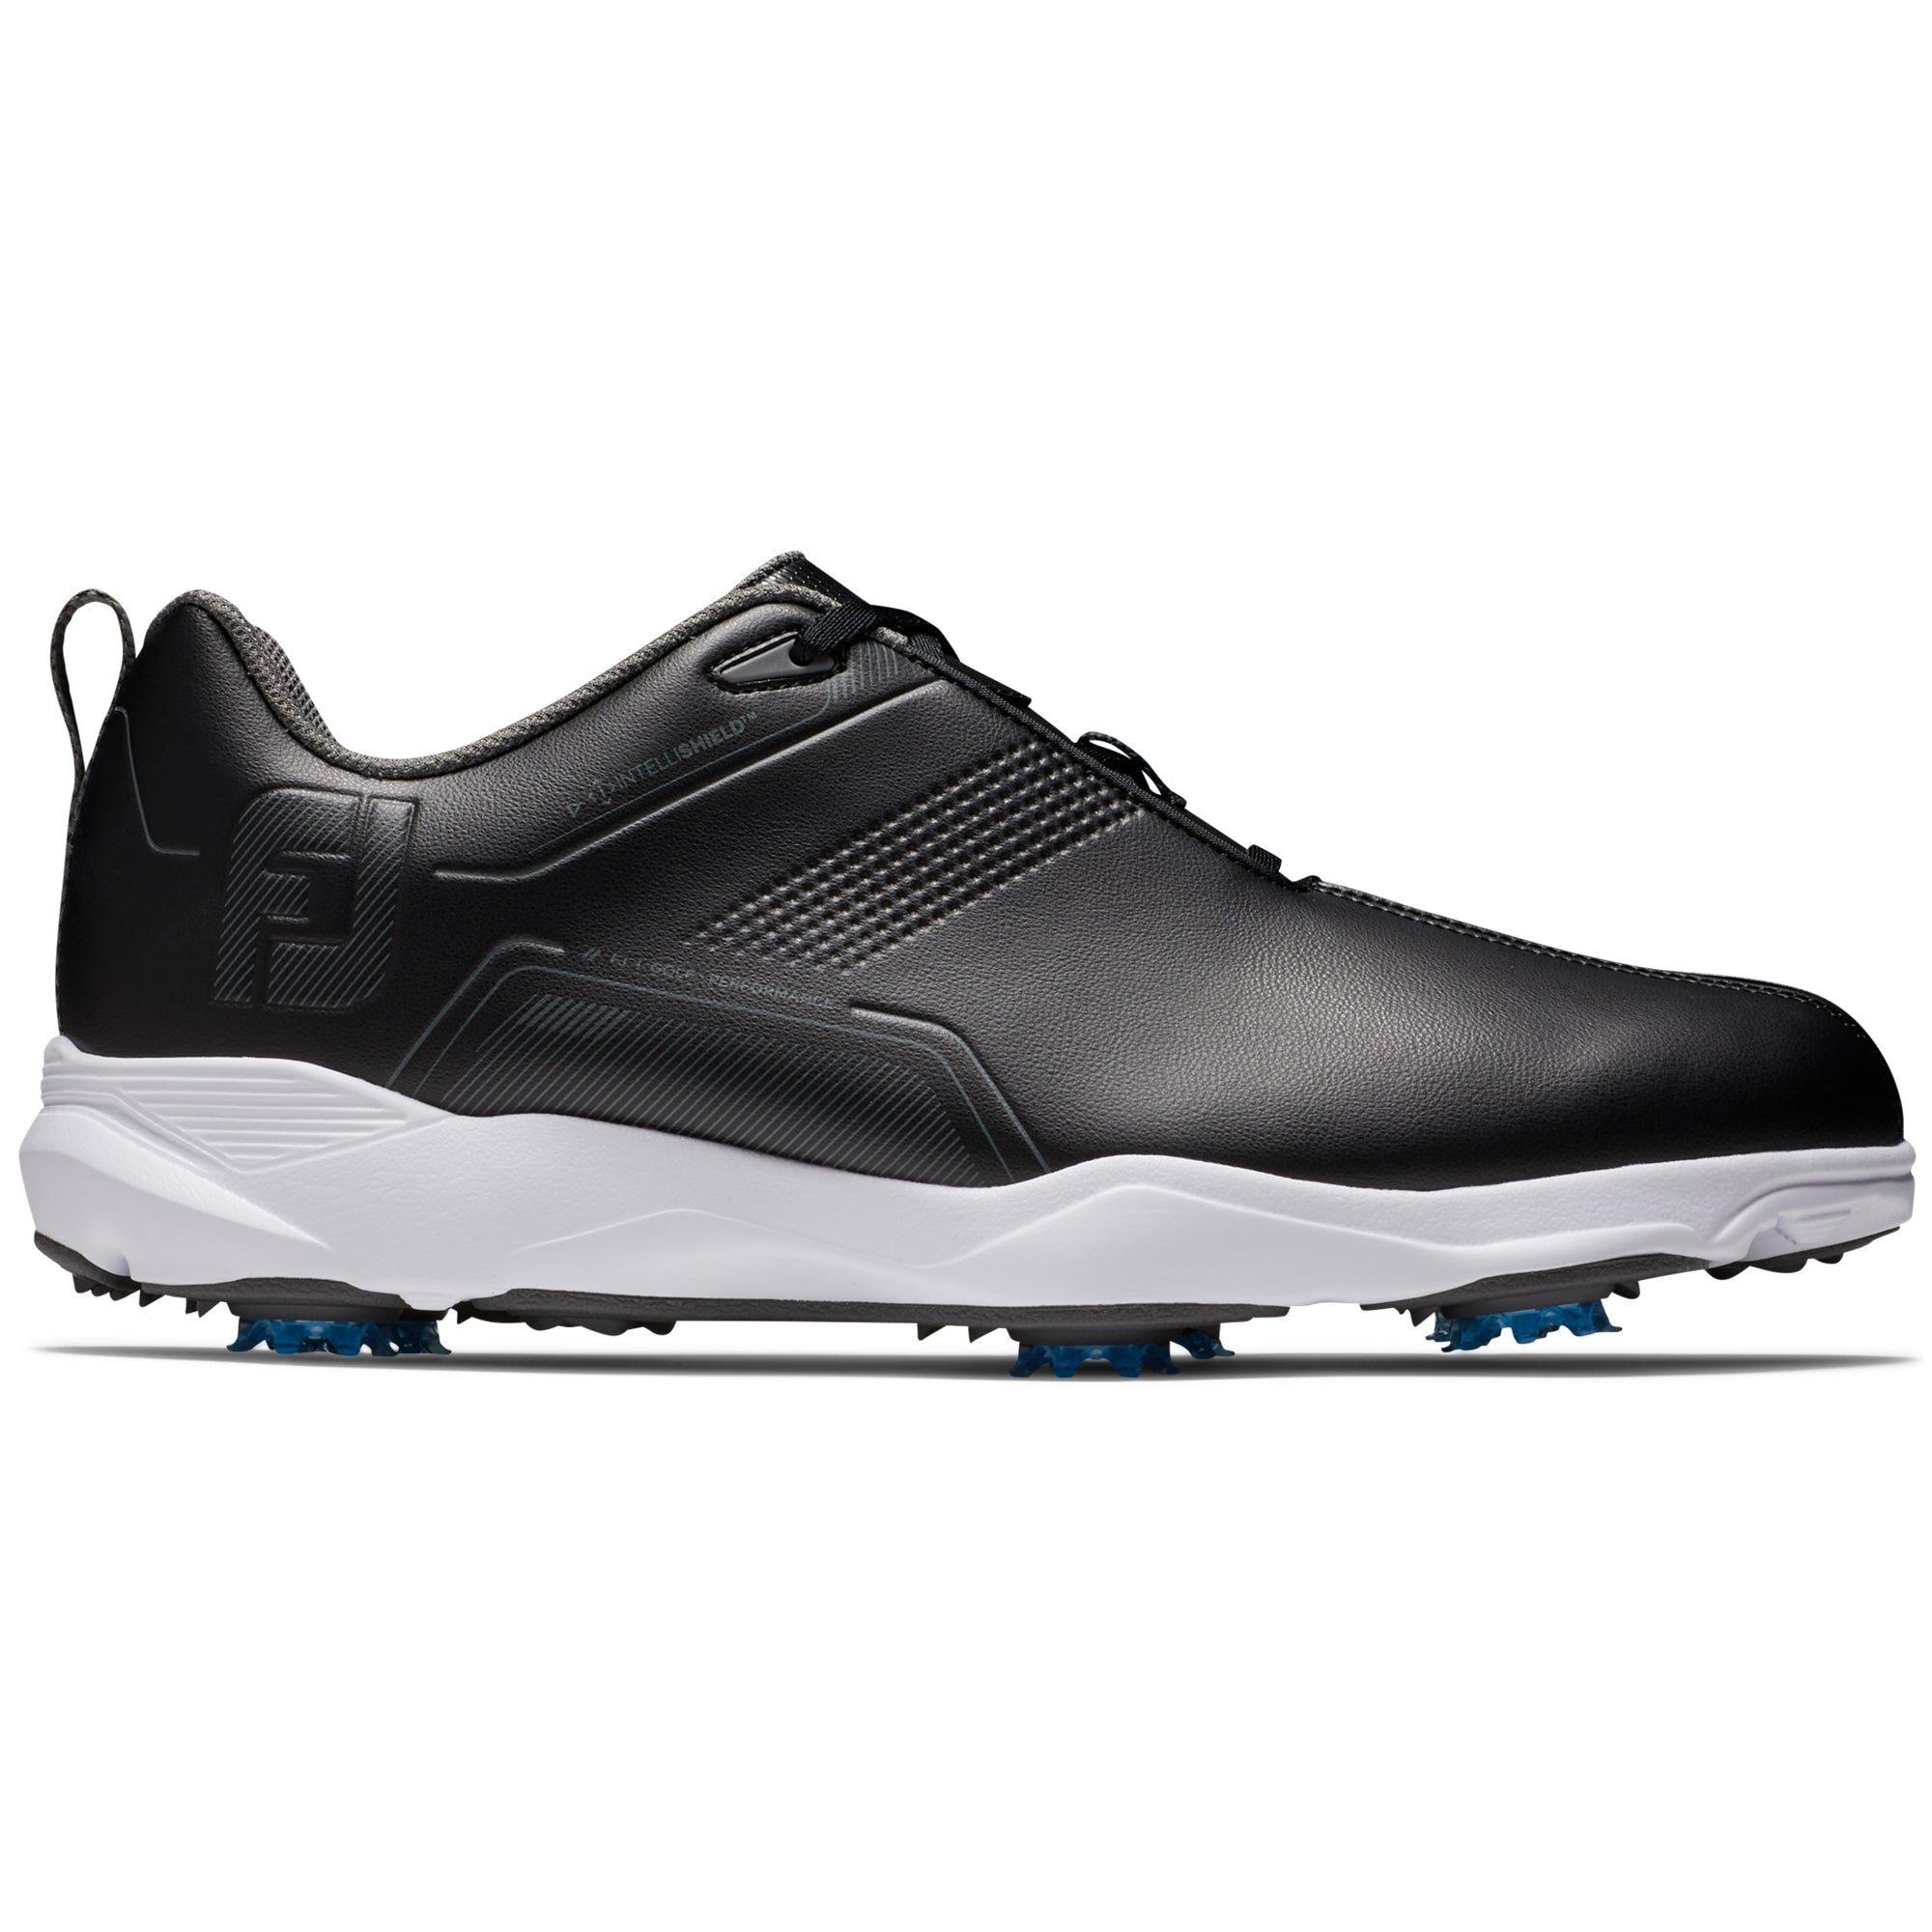 FootJoy eComfort Golf Shoes 57700 Black | Function18 | Restrictedgs